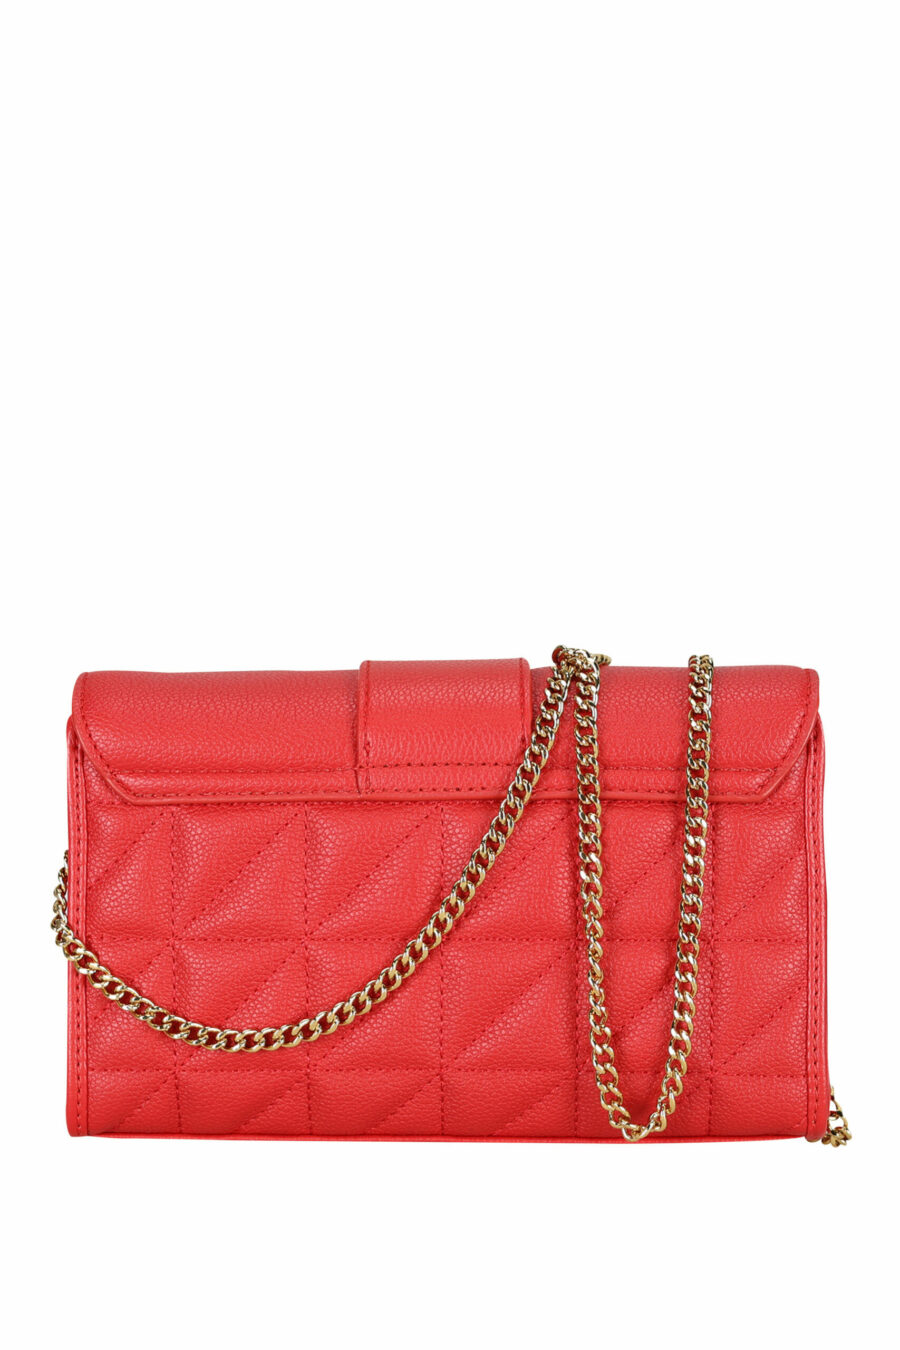 Red "flap" shoulder bag with gold metal heart logo - 8050537398776 2 scaled